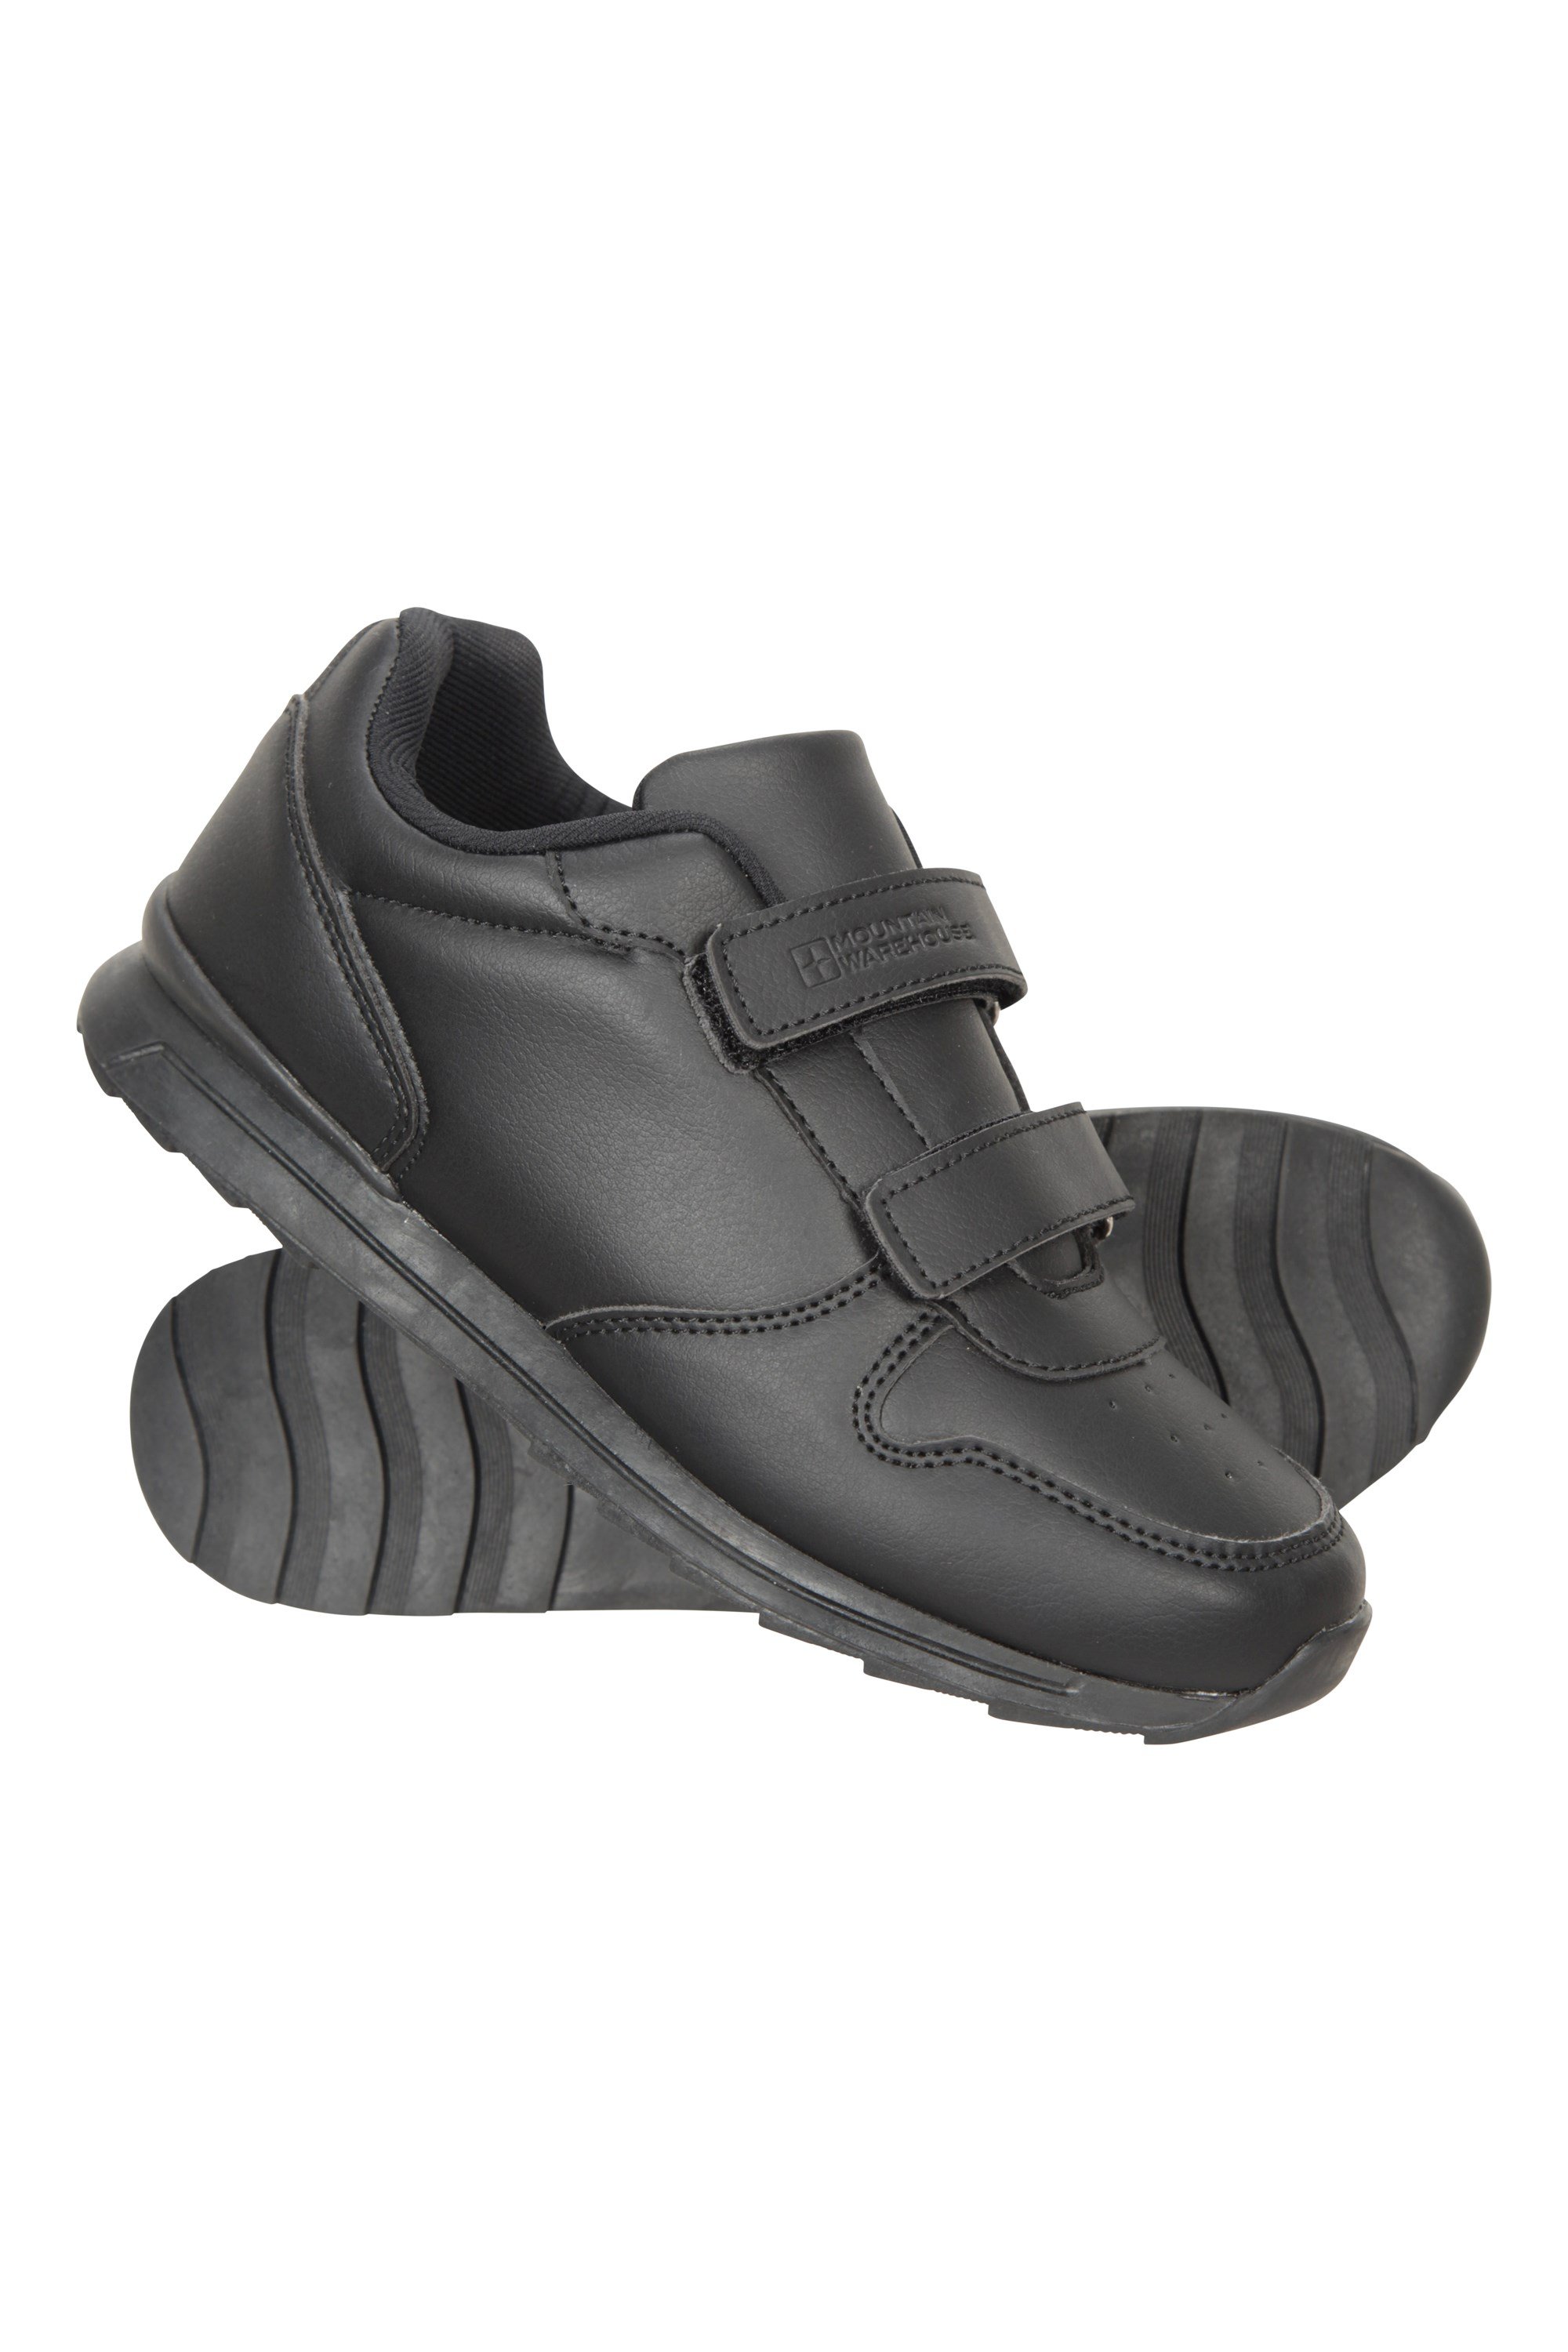 Blaze Kids Adaptive School Shoes - Black